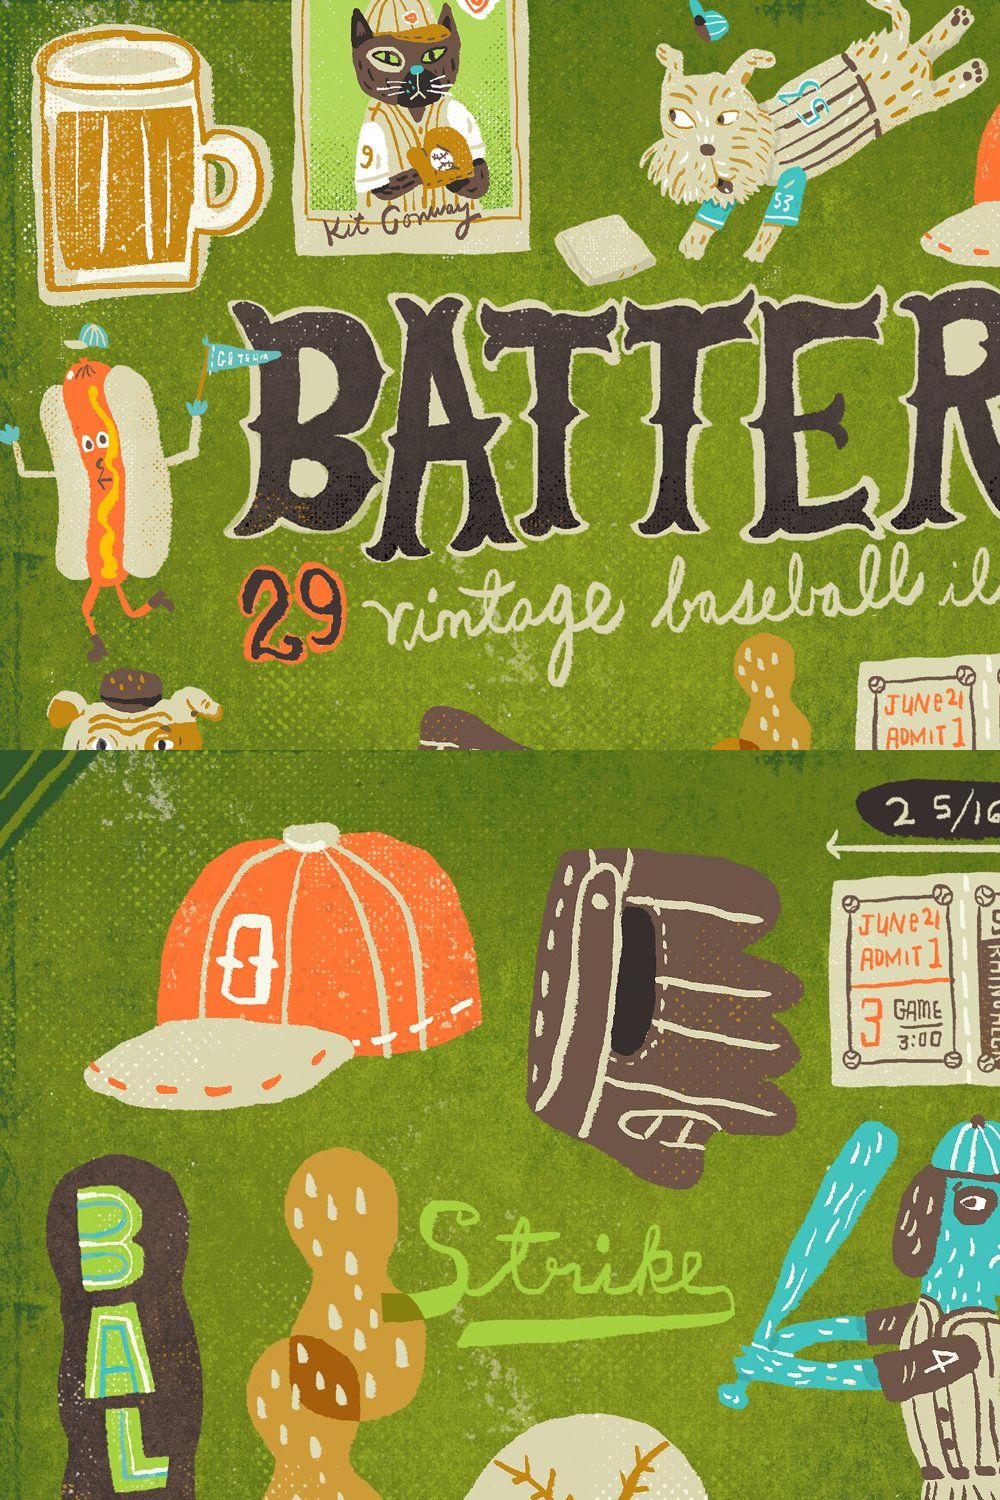 Batter Up pinterest preview image.